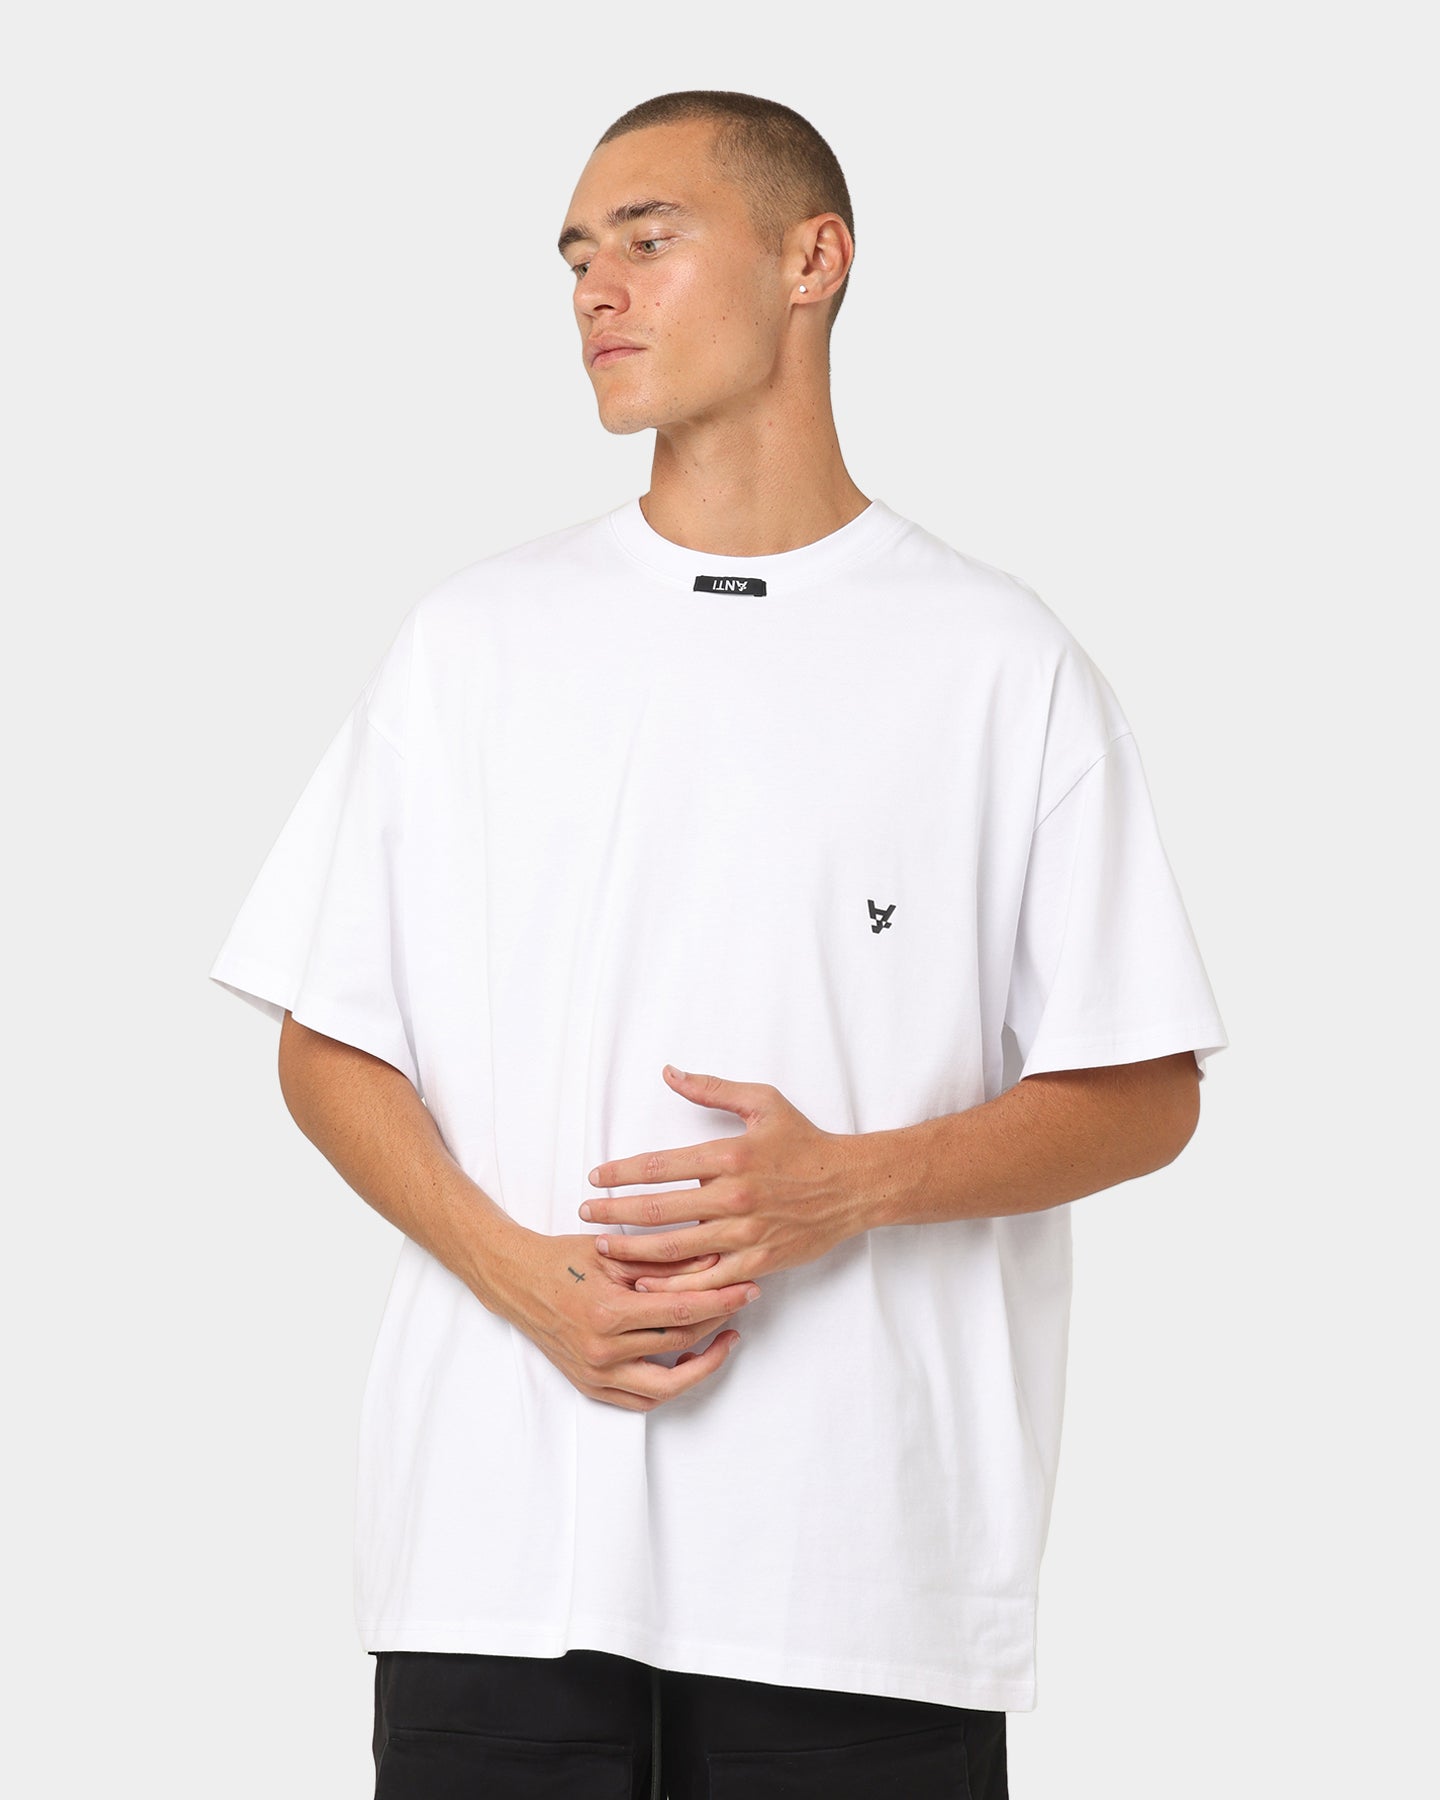 The Anti Order Error Eror T-Shirt White/Black